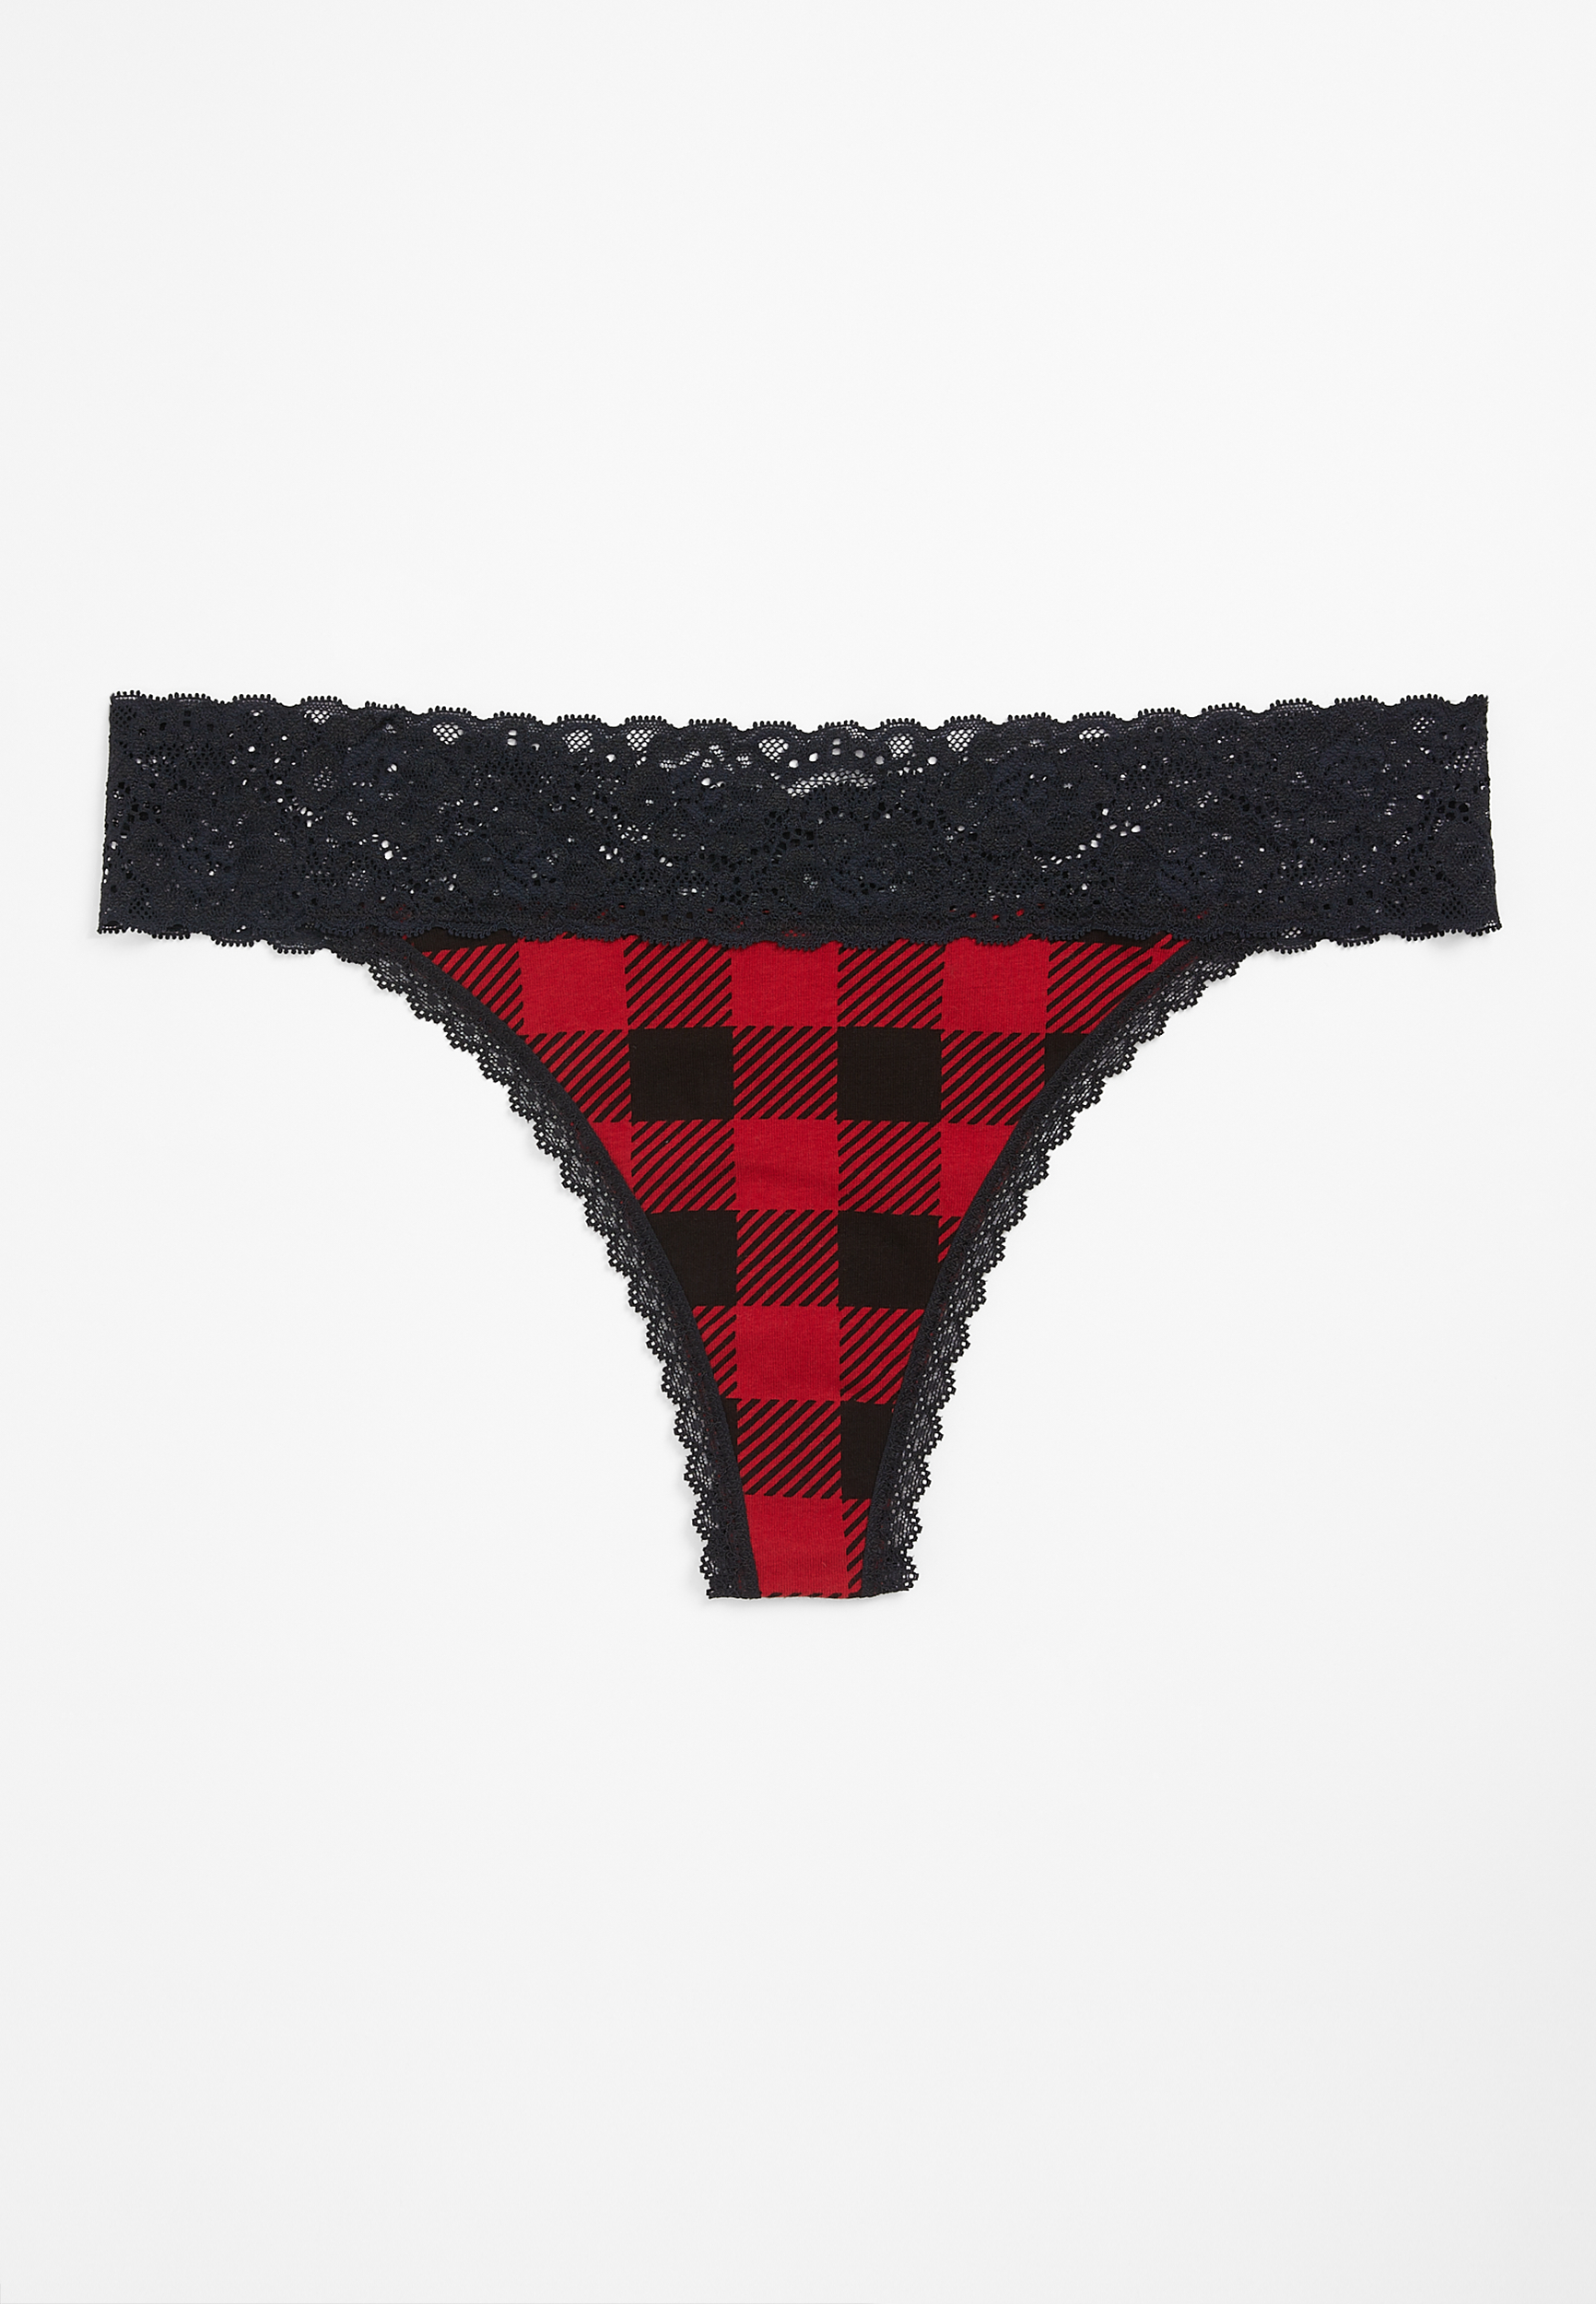 Buffalo Scottish Tartan Plaid Checkered G-String Thongs Women's T-Back Underwear  Panty 